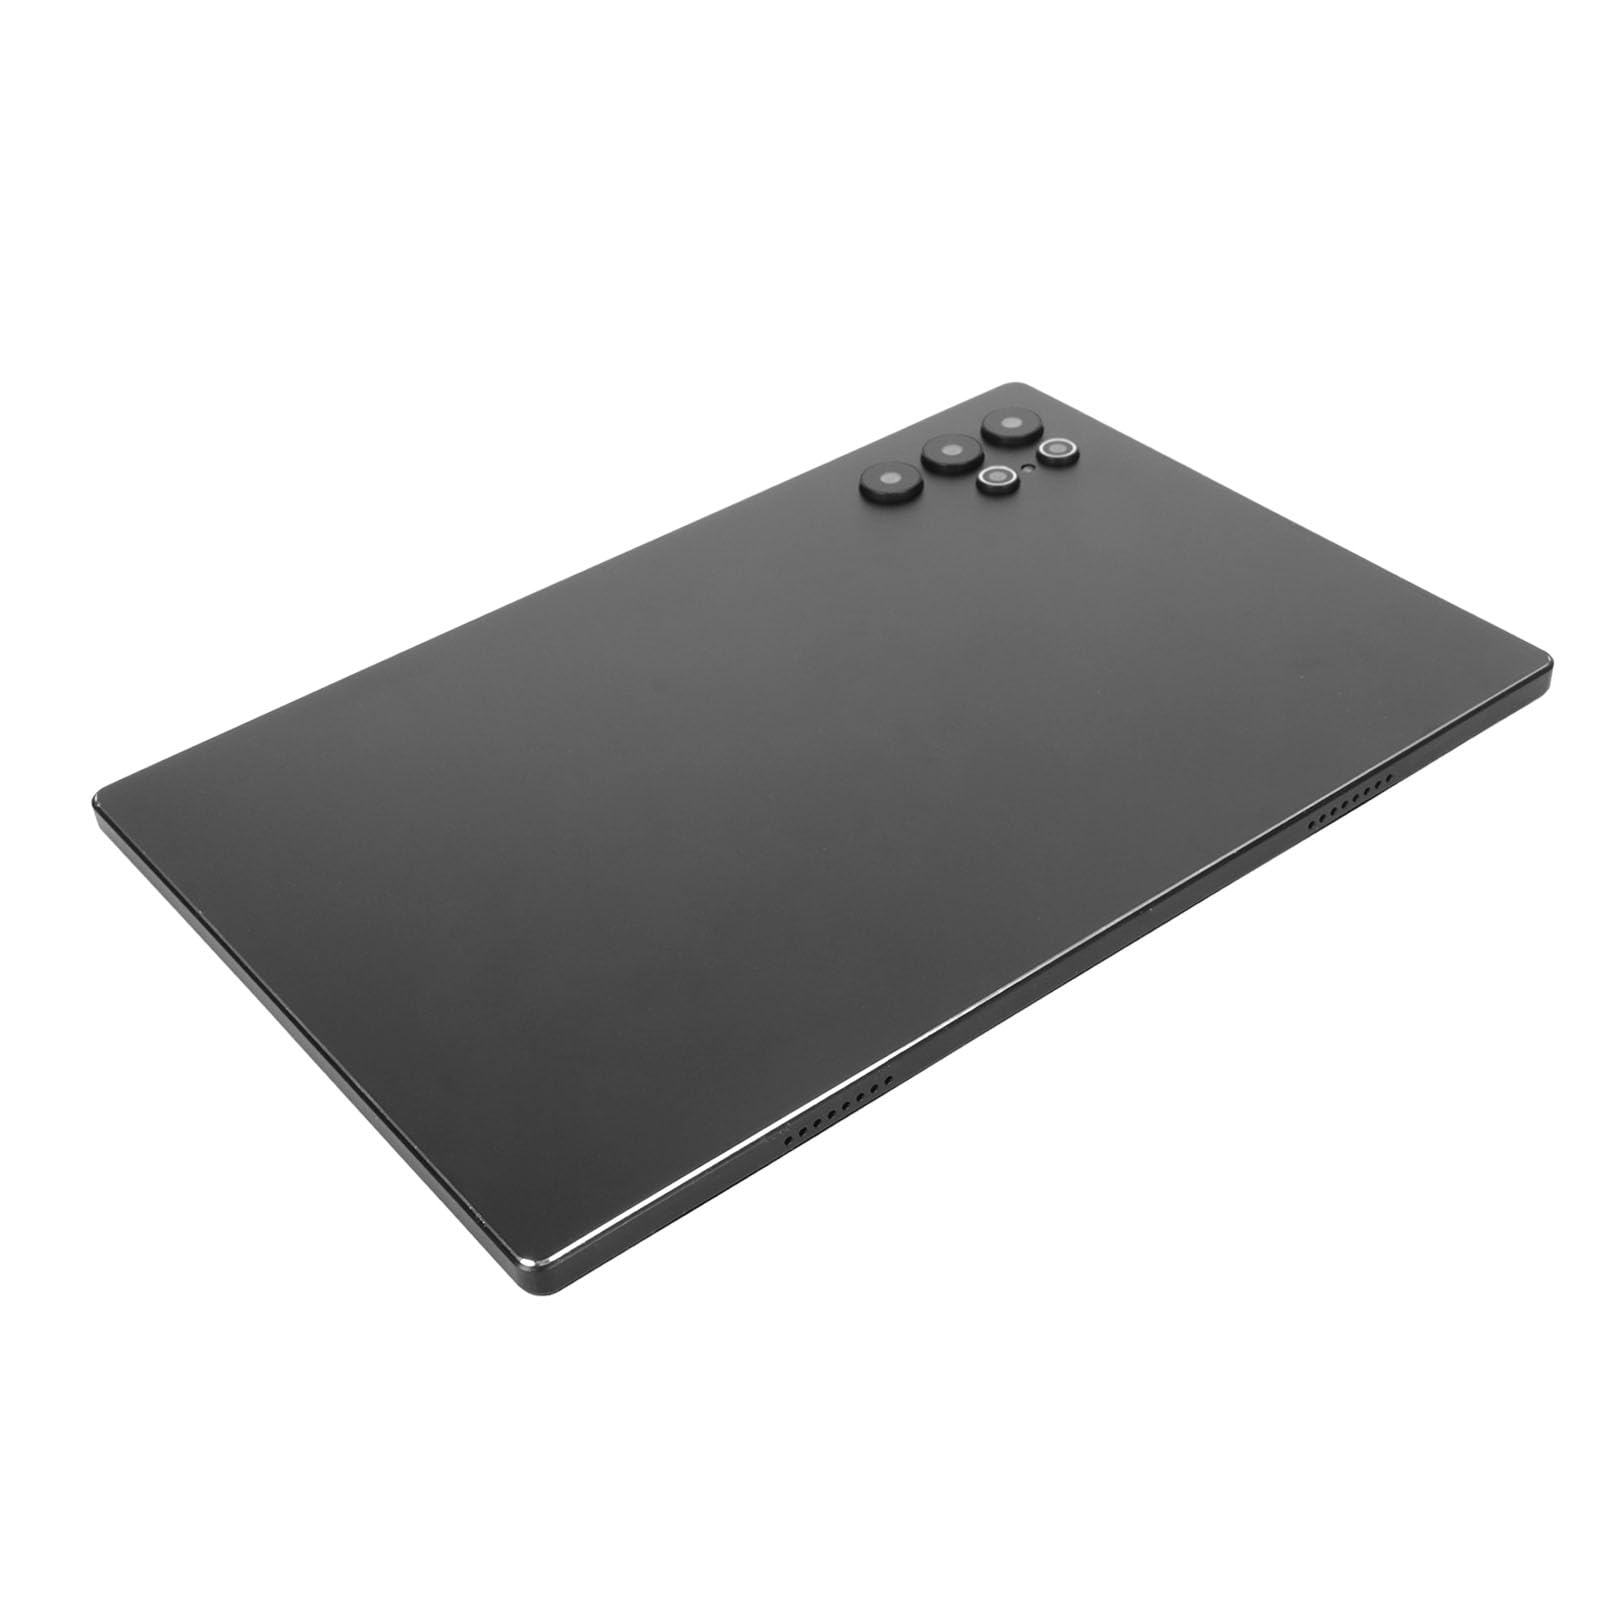 HEEPDD Computer Tablet, 8MP 24MP Dual Camera 10 Inch 100-240V US Plug WiFi Computer Tablet (Black)